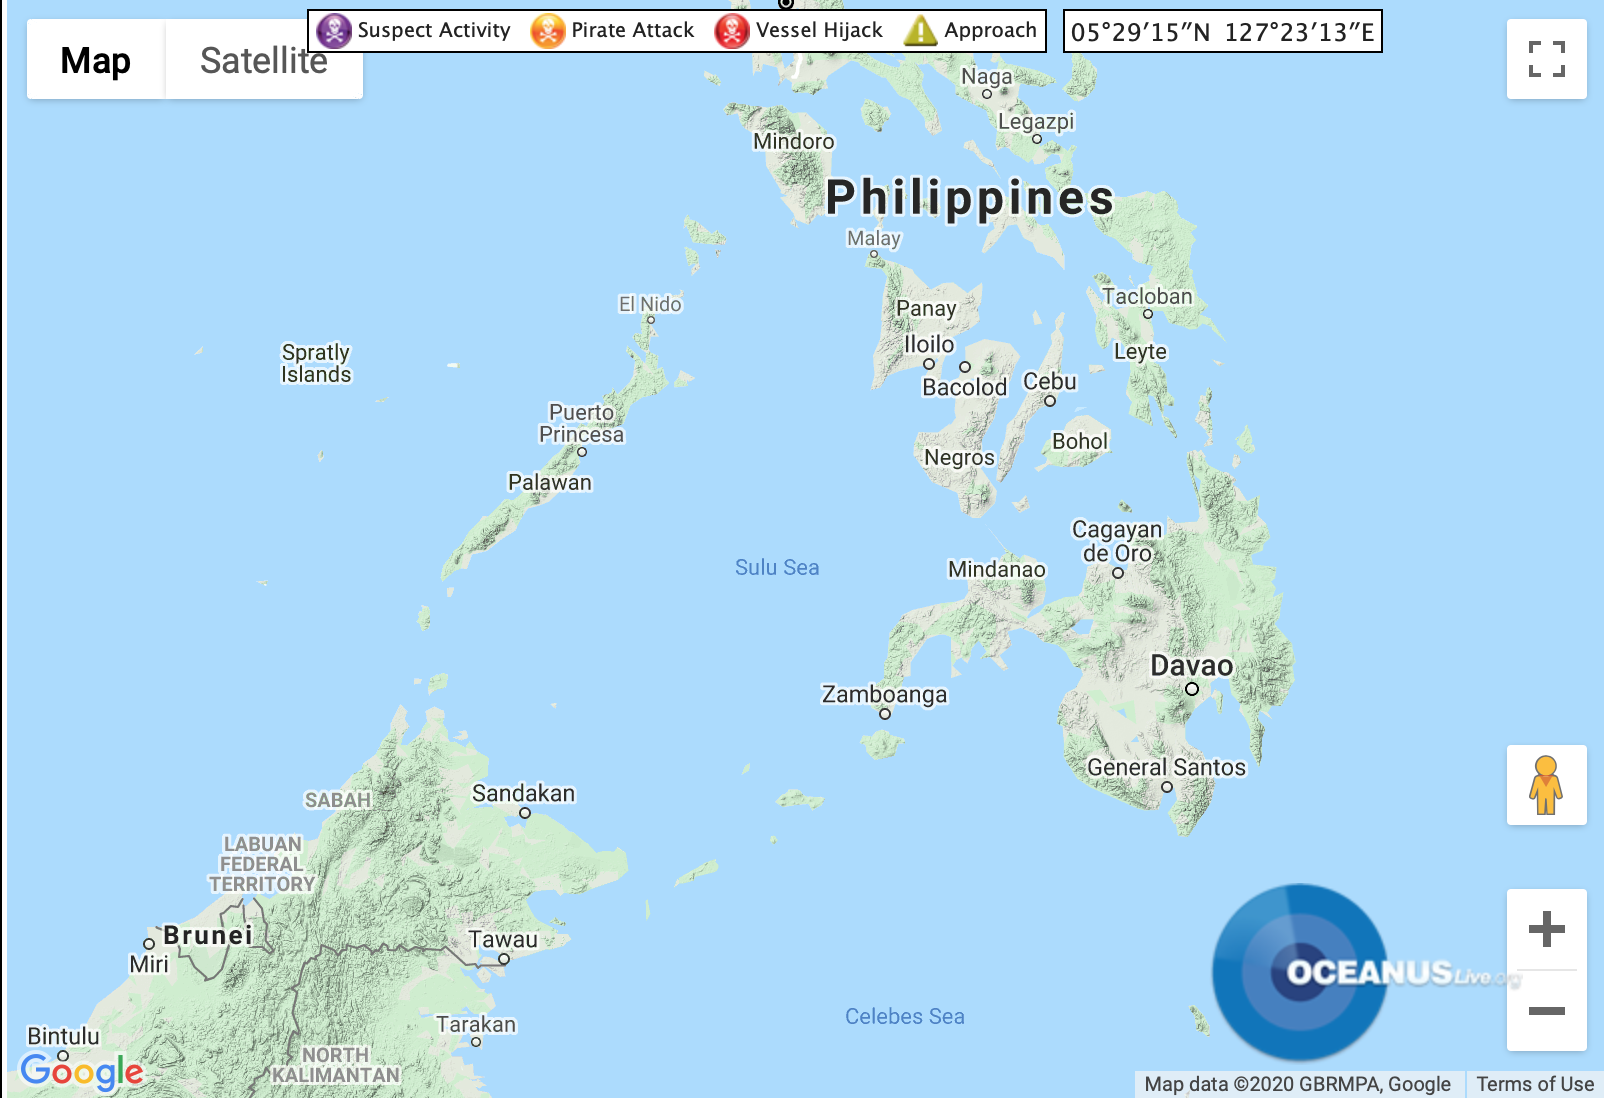 Sulu Sea Map by OCEANUSLive